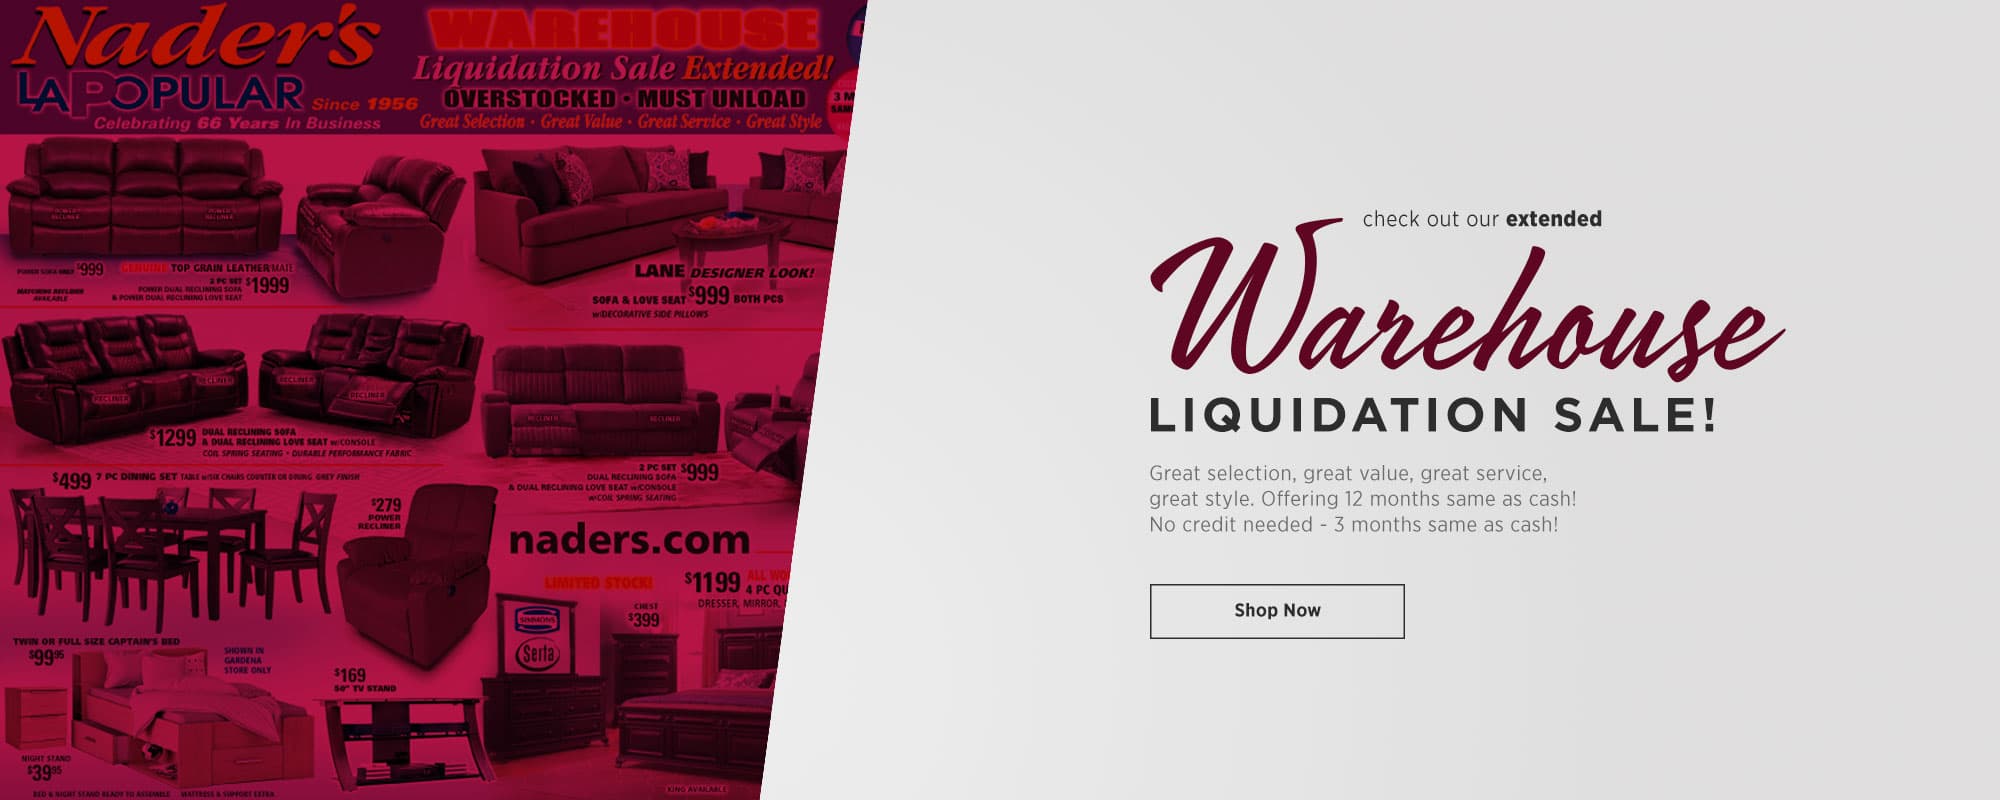 Warehouse Liquidation Sale Extended - Shop Now